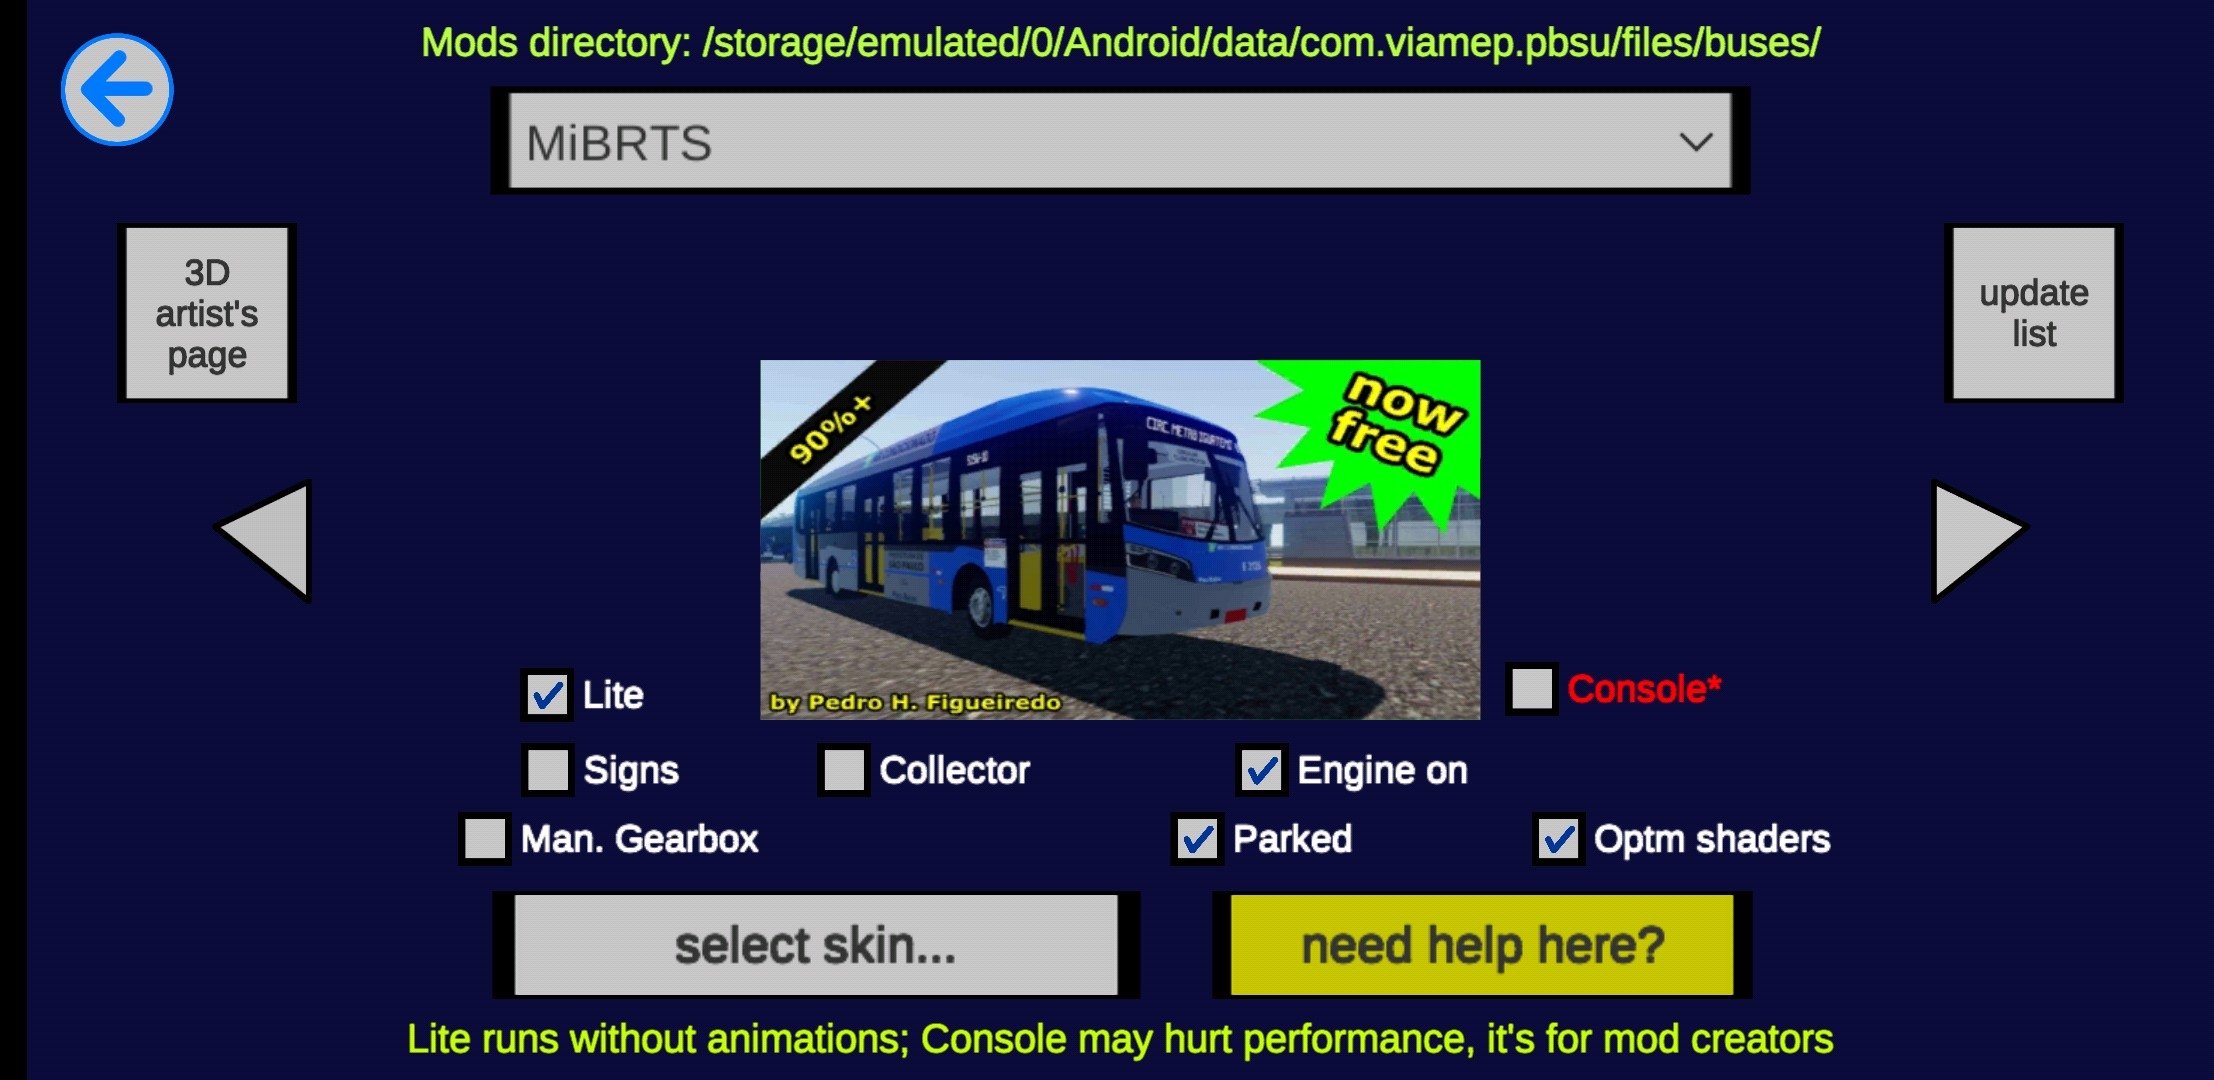 Mods Proton Bus Simulator e Pr APK for Android Download